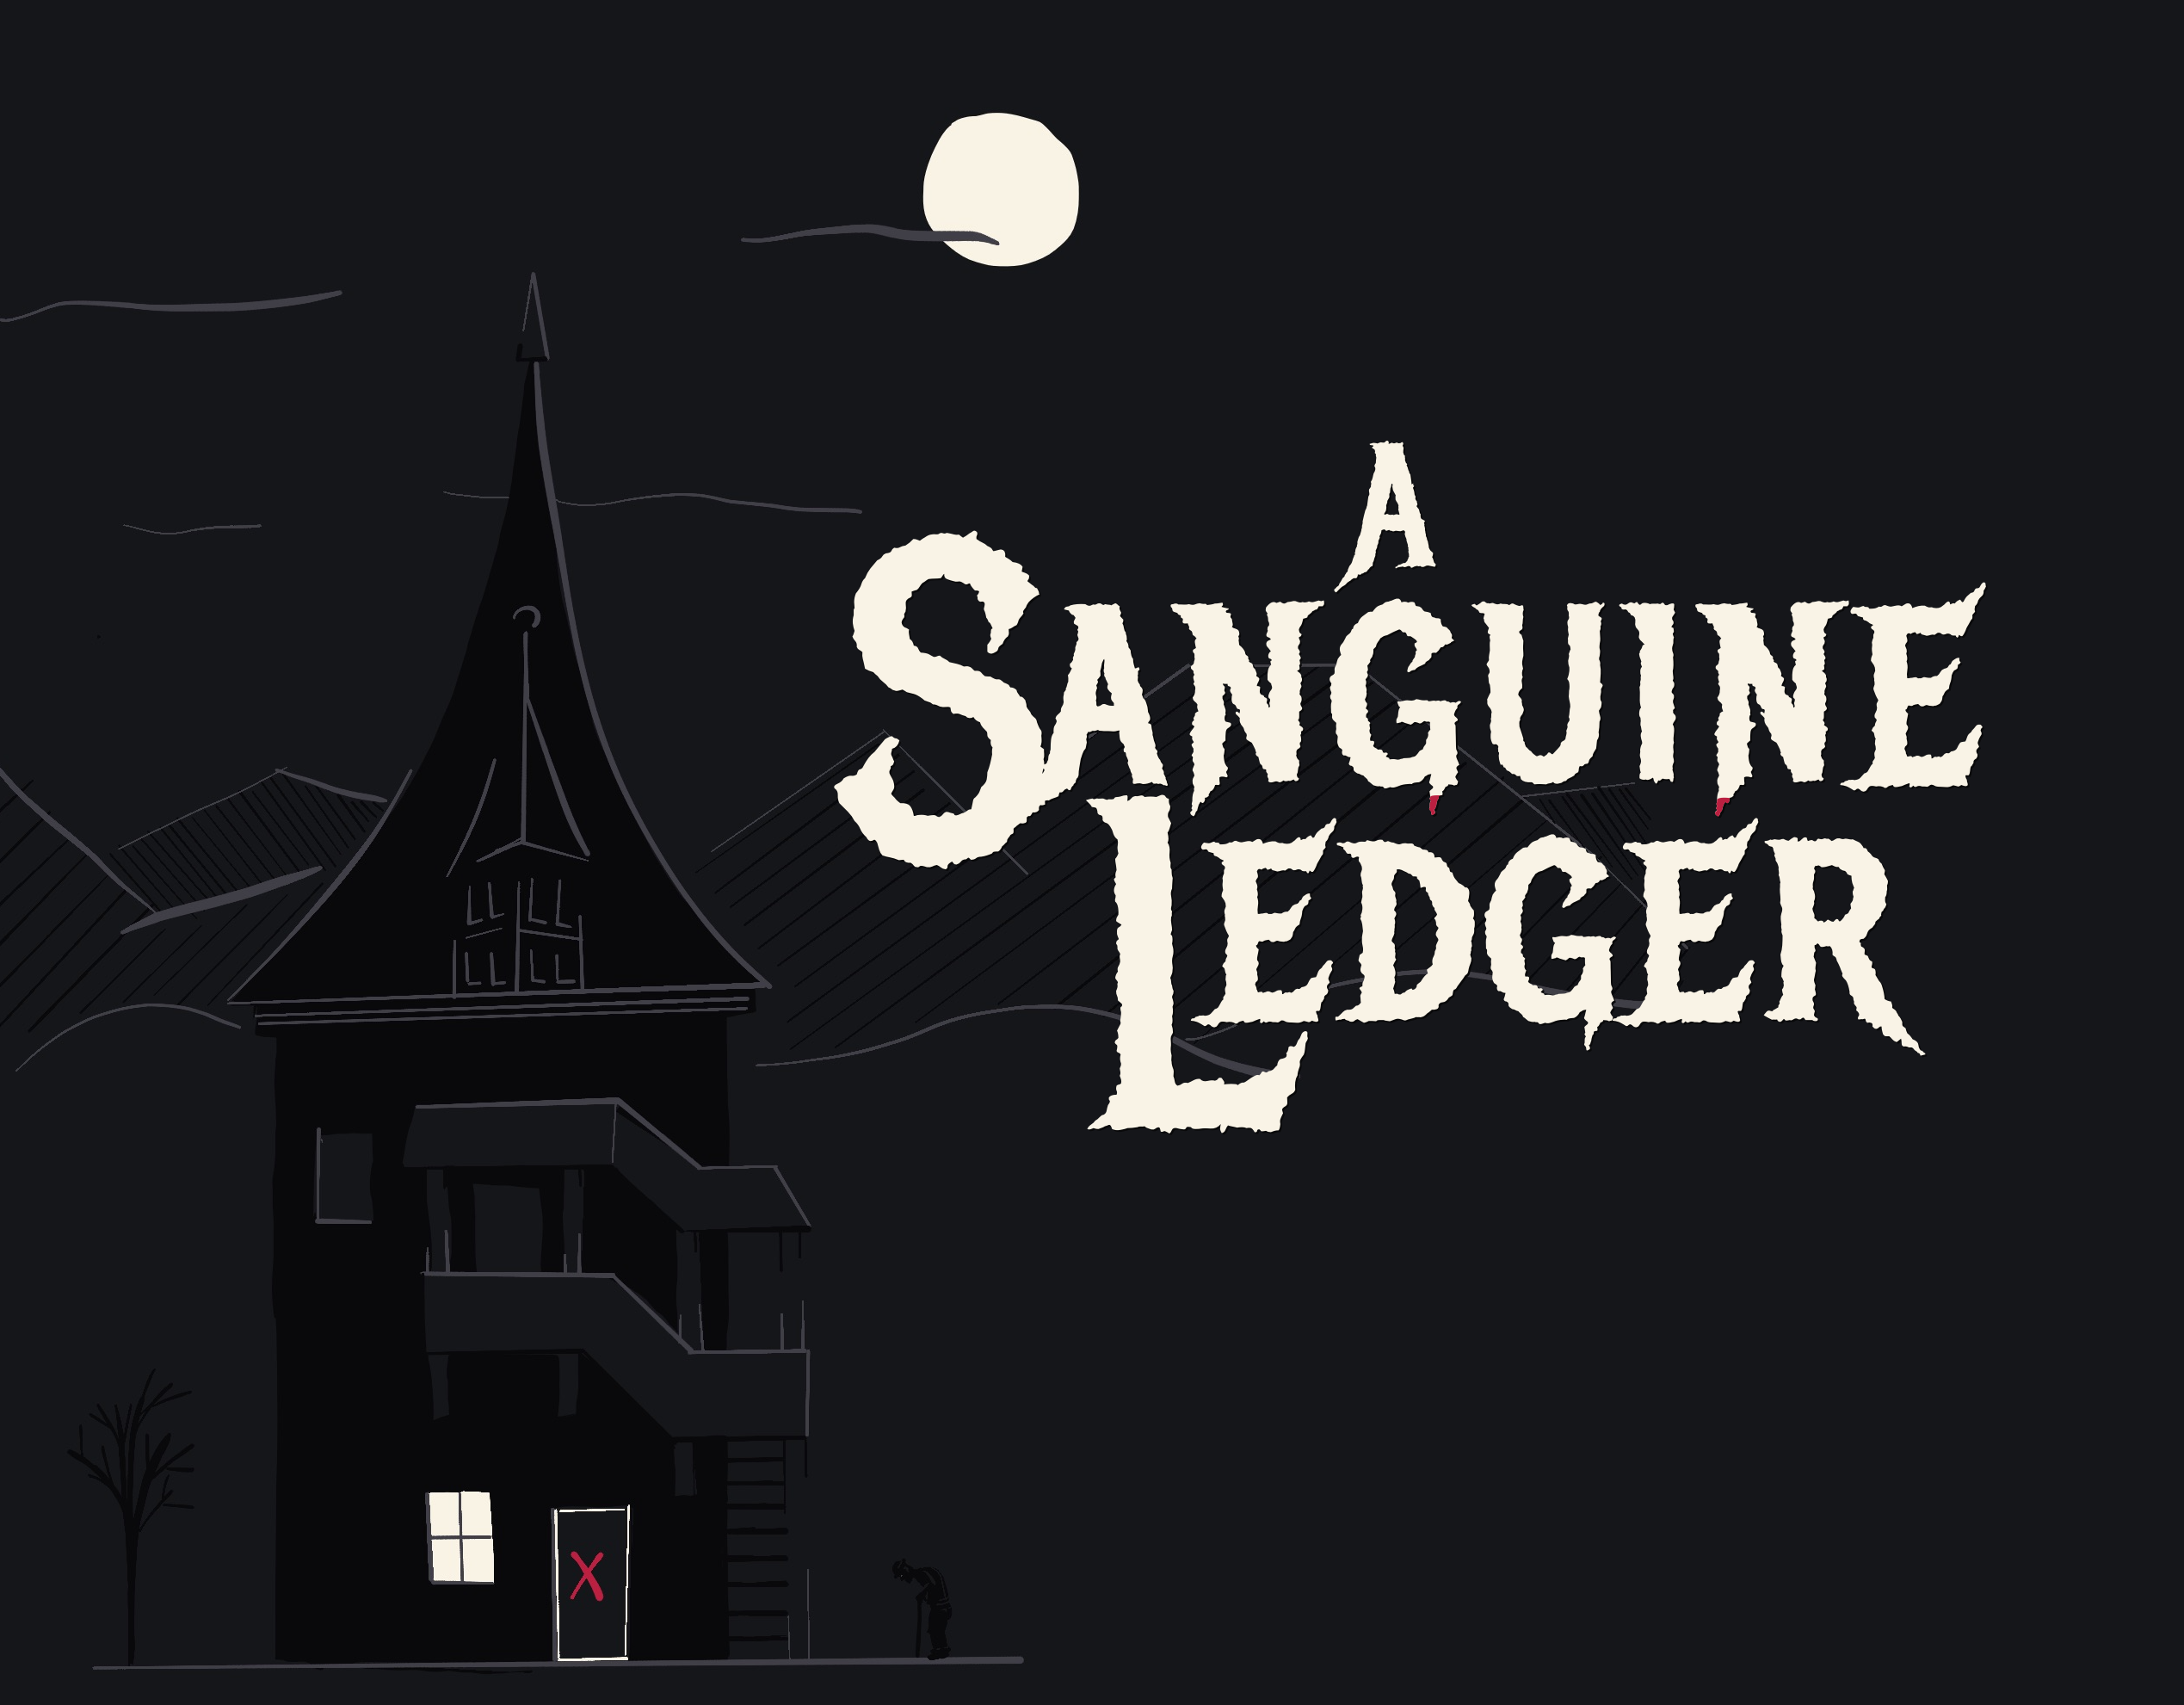 A Sanguine Ledger